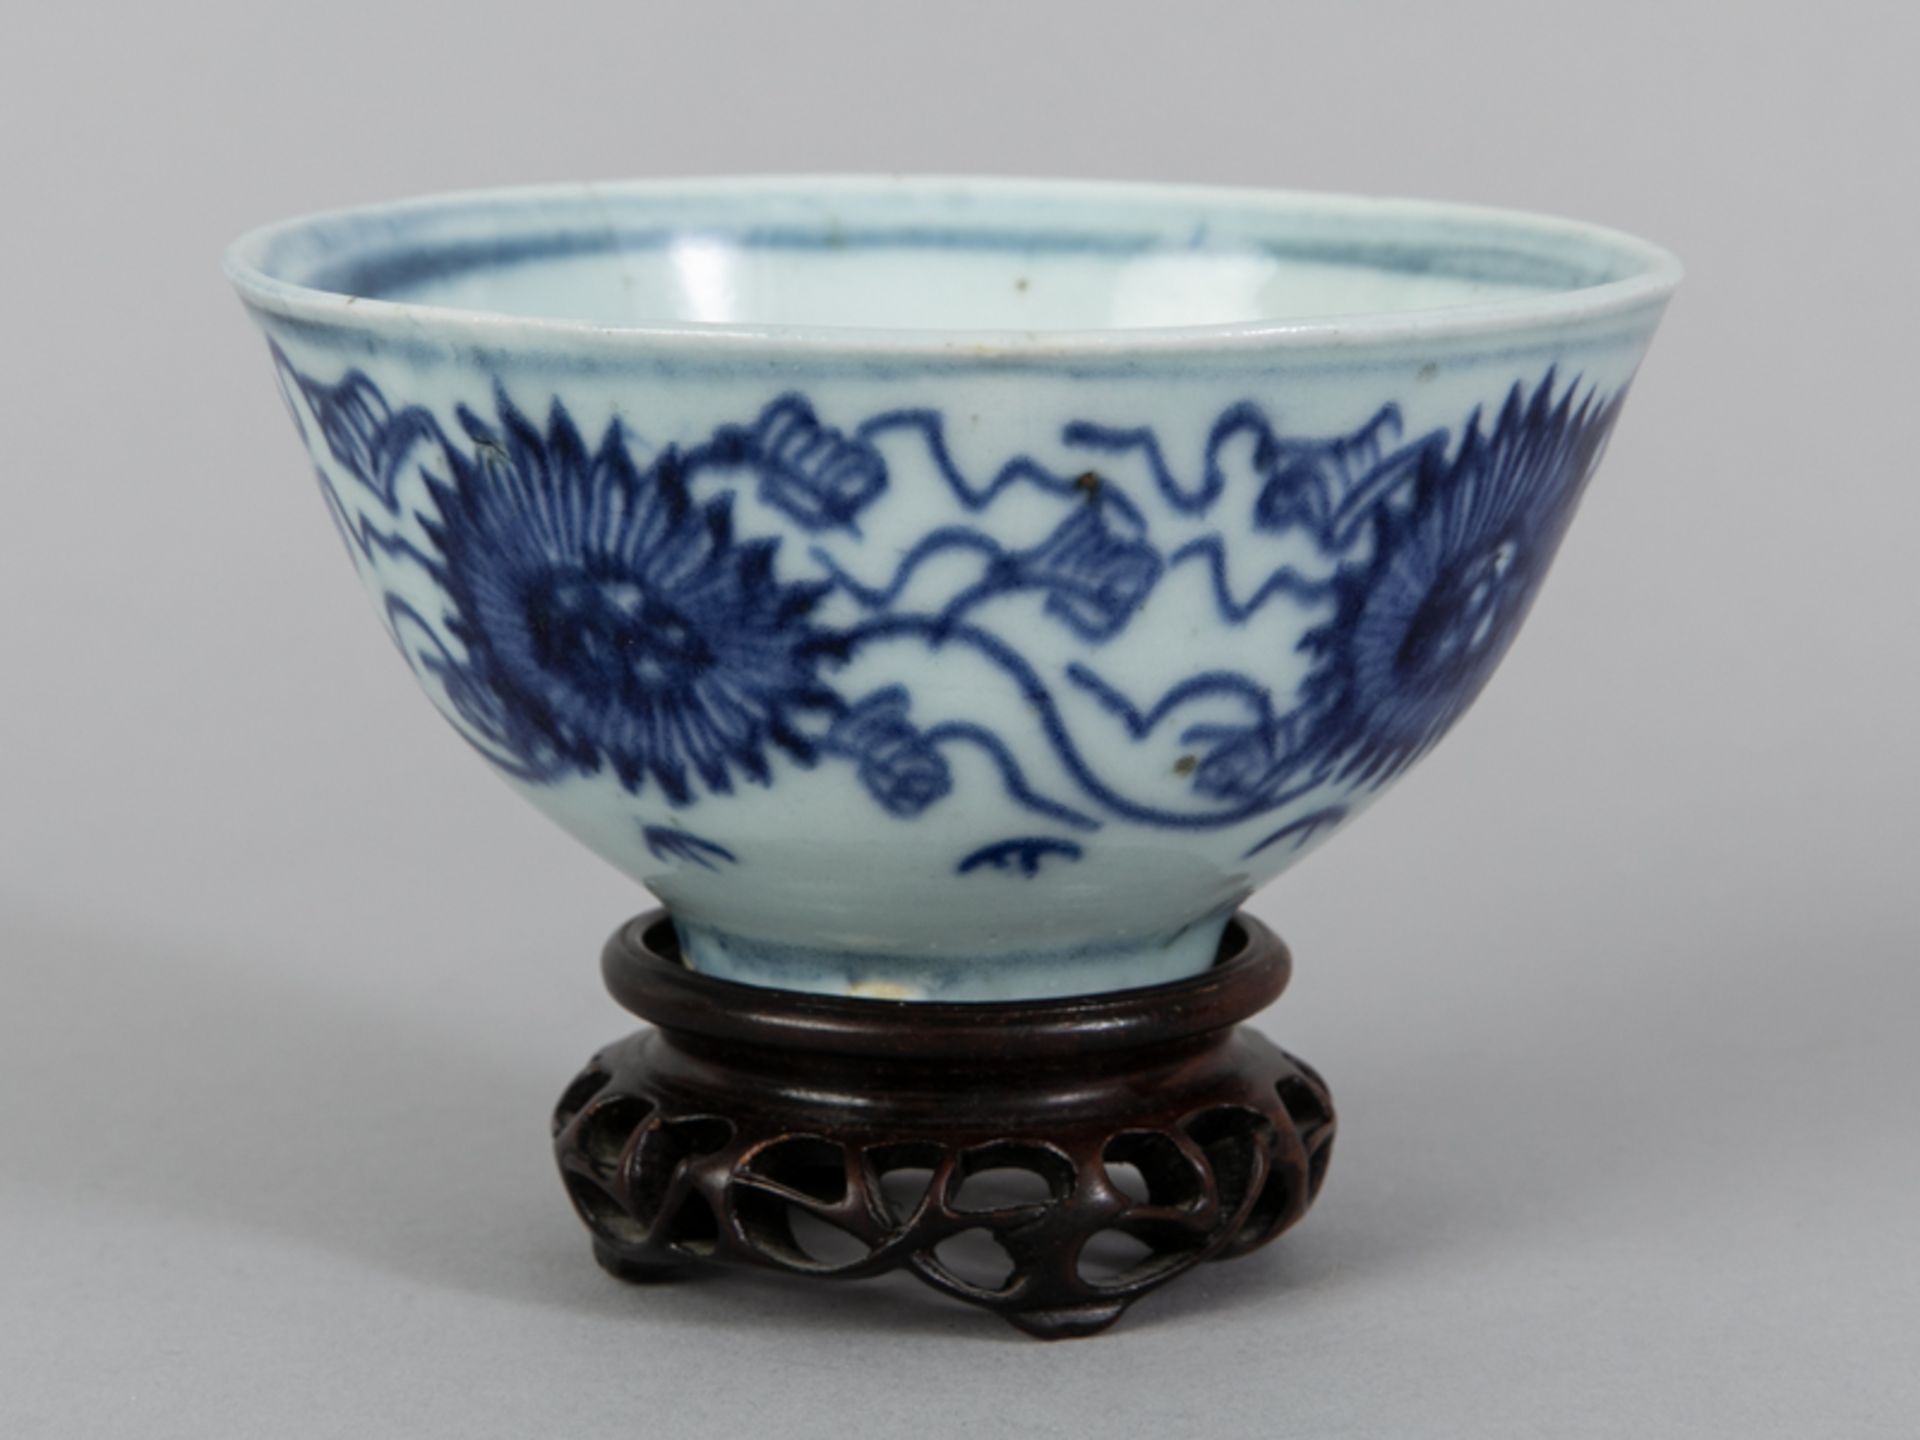 Kleine Schale / Kumme / Teeschale, China, wohl Qing-Dynastie, 18. Jh. - Image 5 of 6